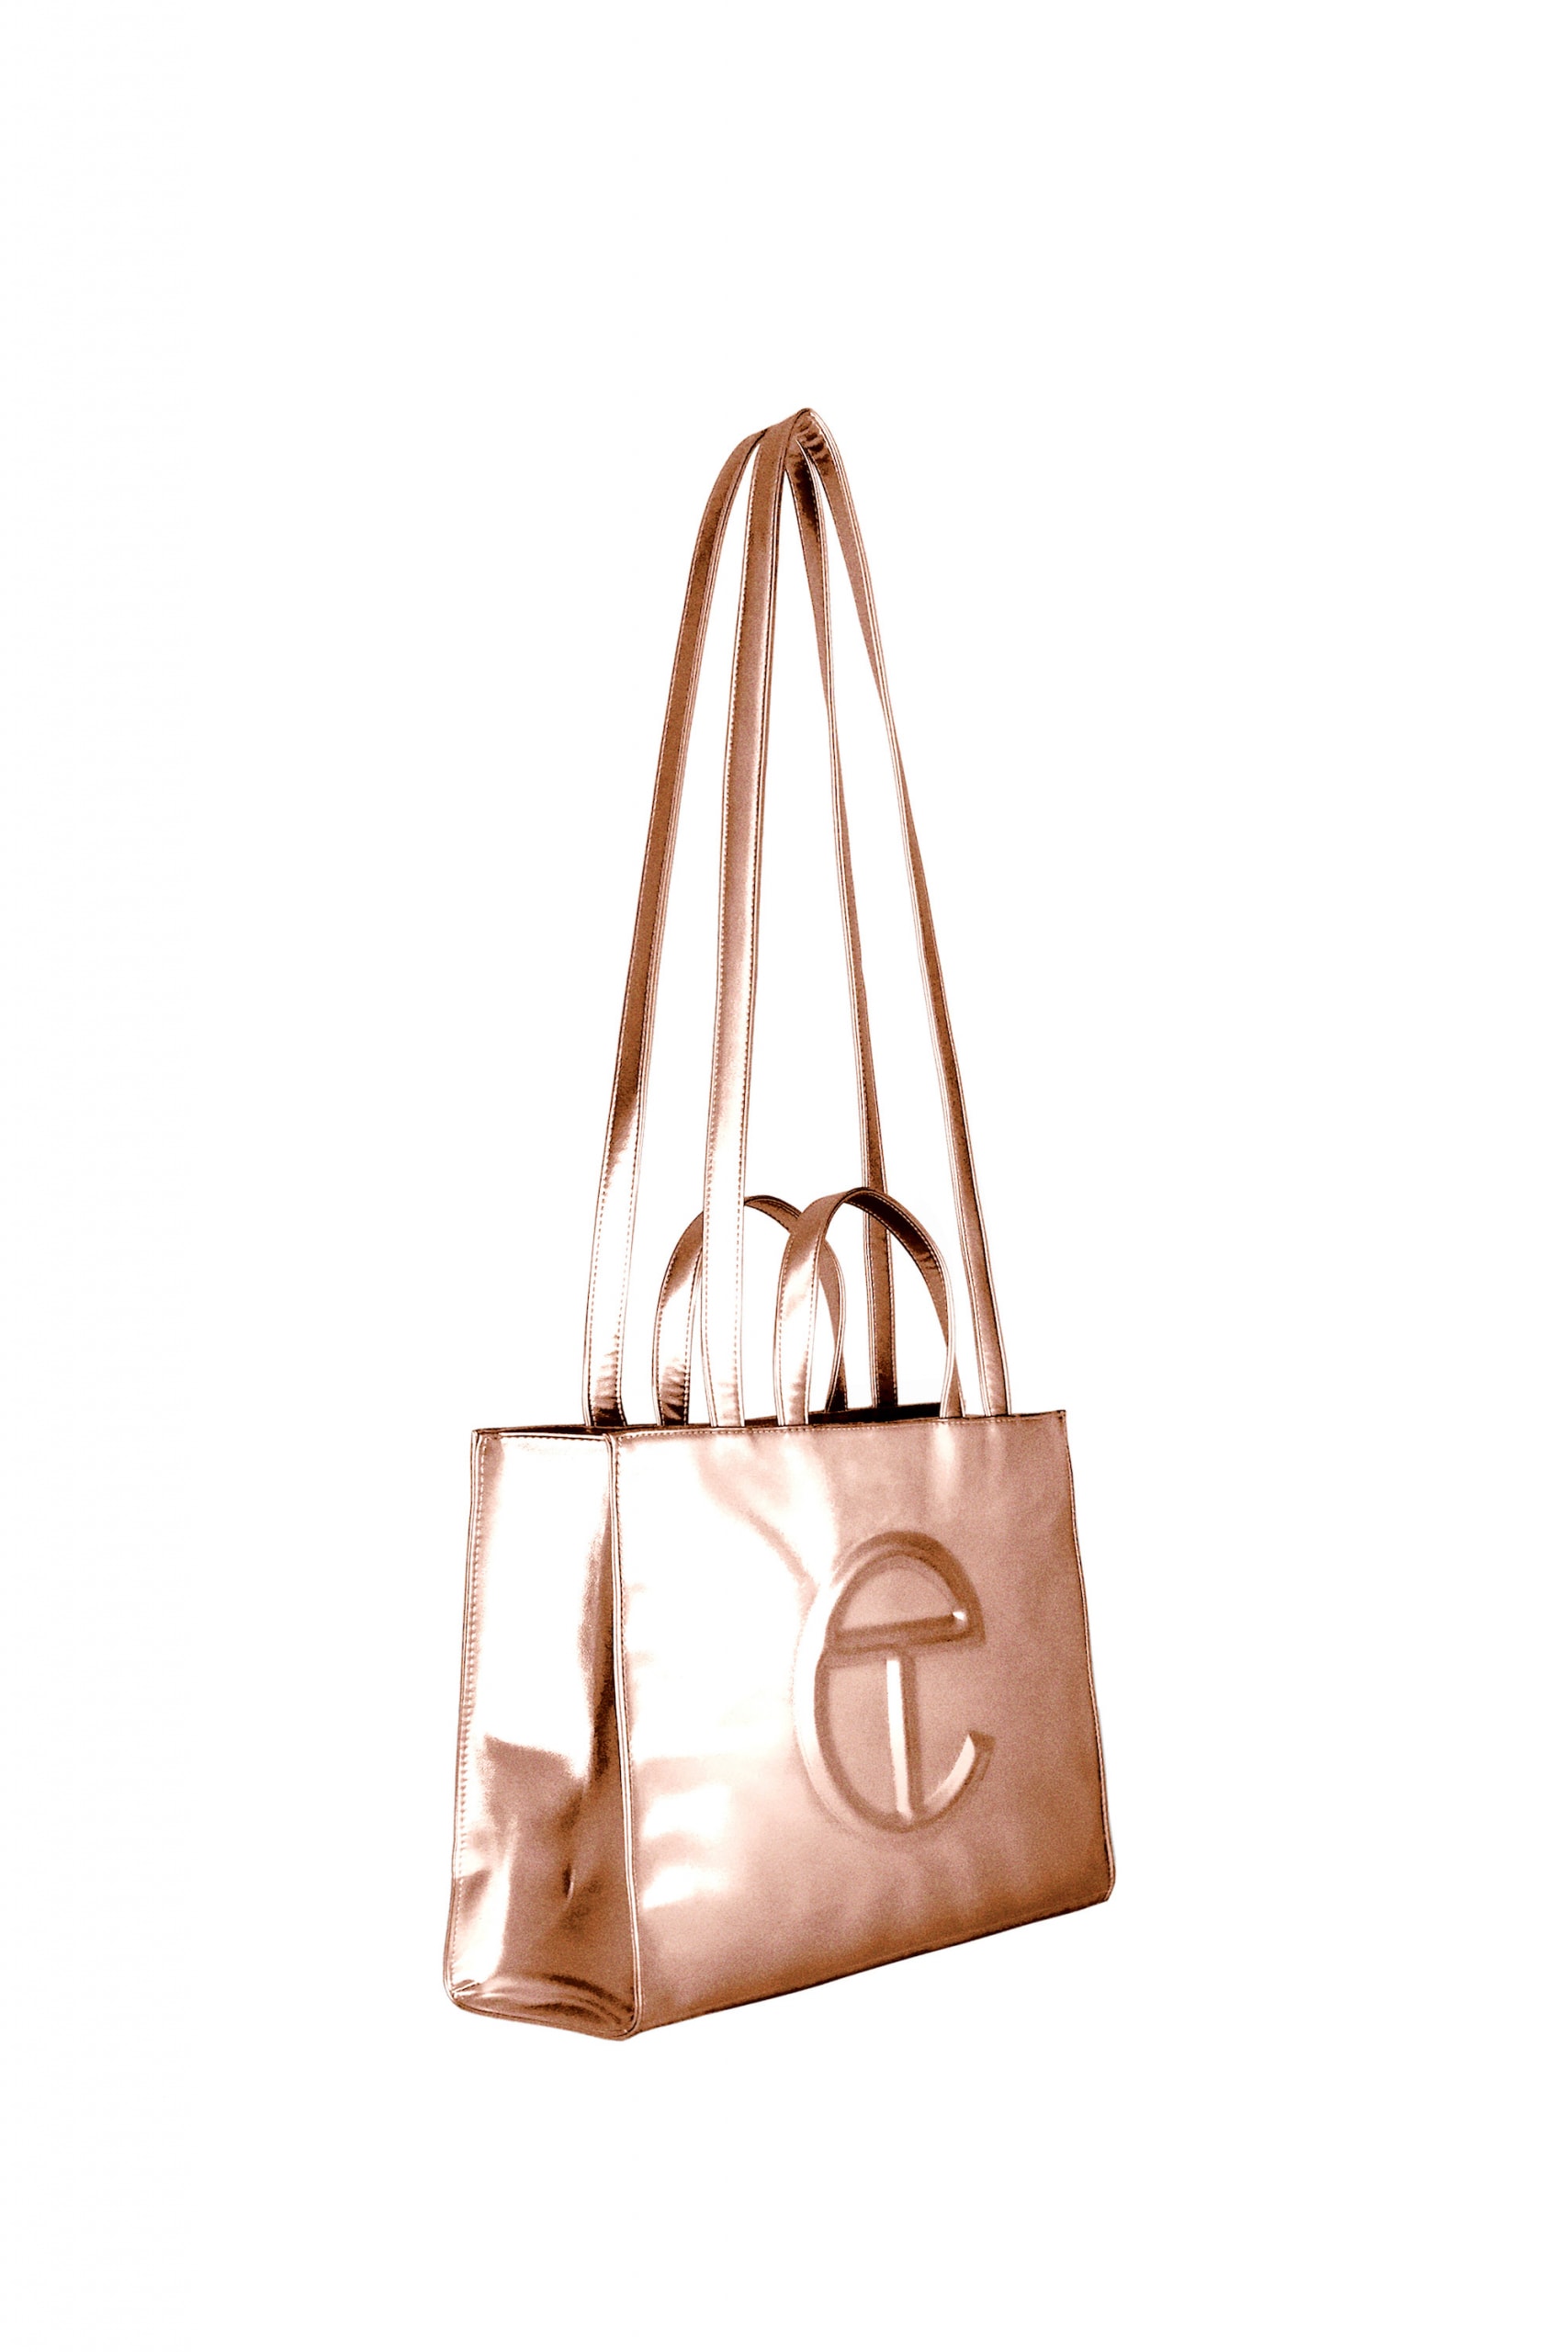 Telfar Signature Logo Tote Bag "Copper" Release Gold Shimmery Drop 